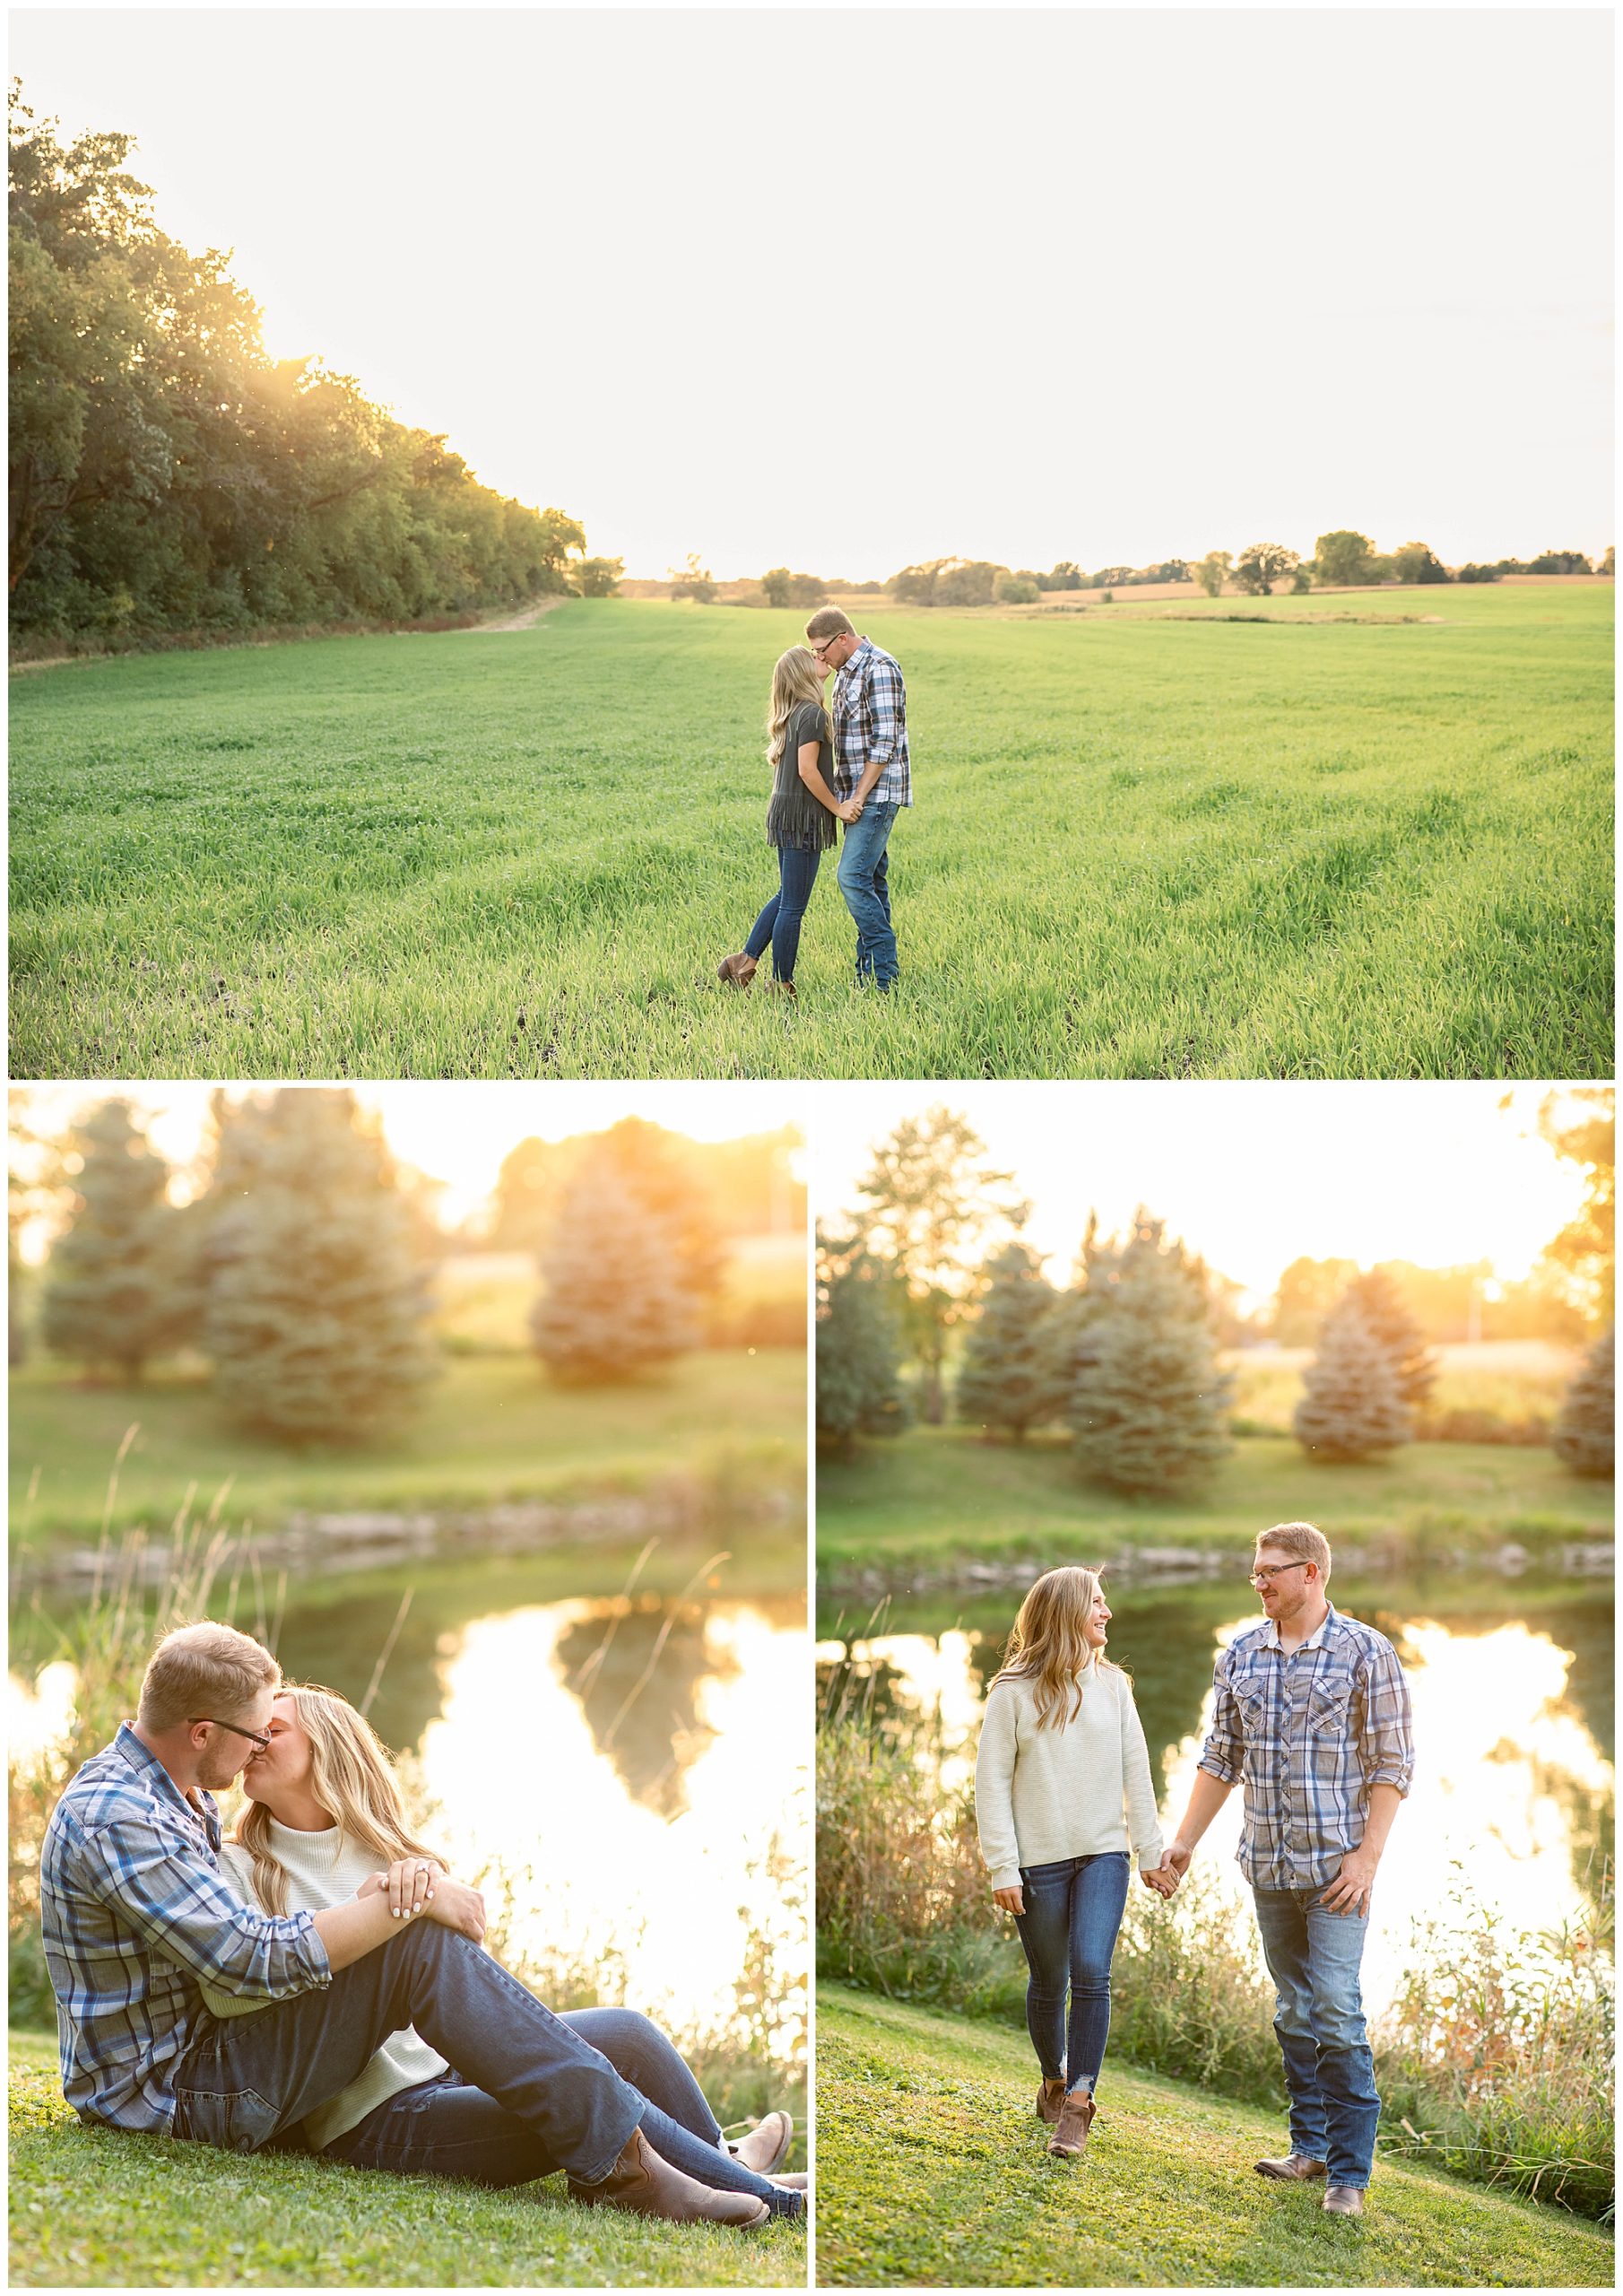 Engagement Photos near pond